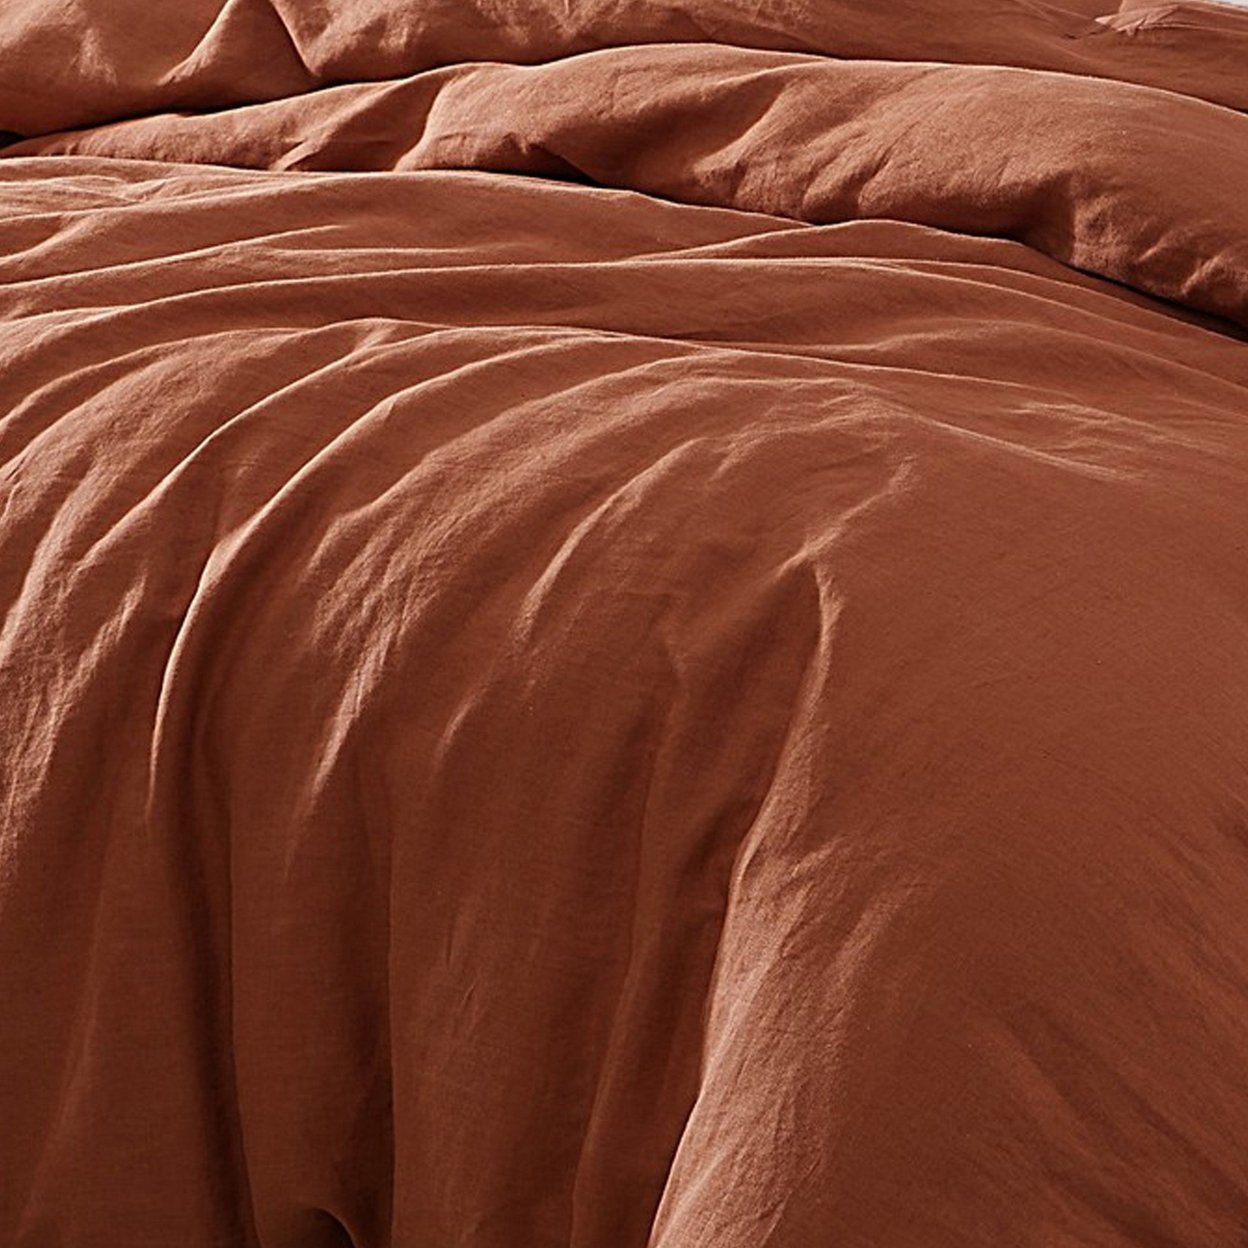 Edge 3 Piece Twin Size Duvet Comforter Set, Washed Linen, Rust Orange - Saltoro Sherpi